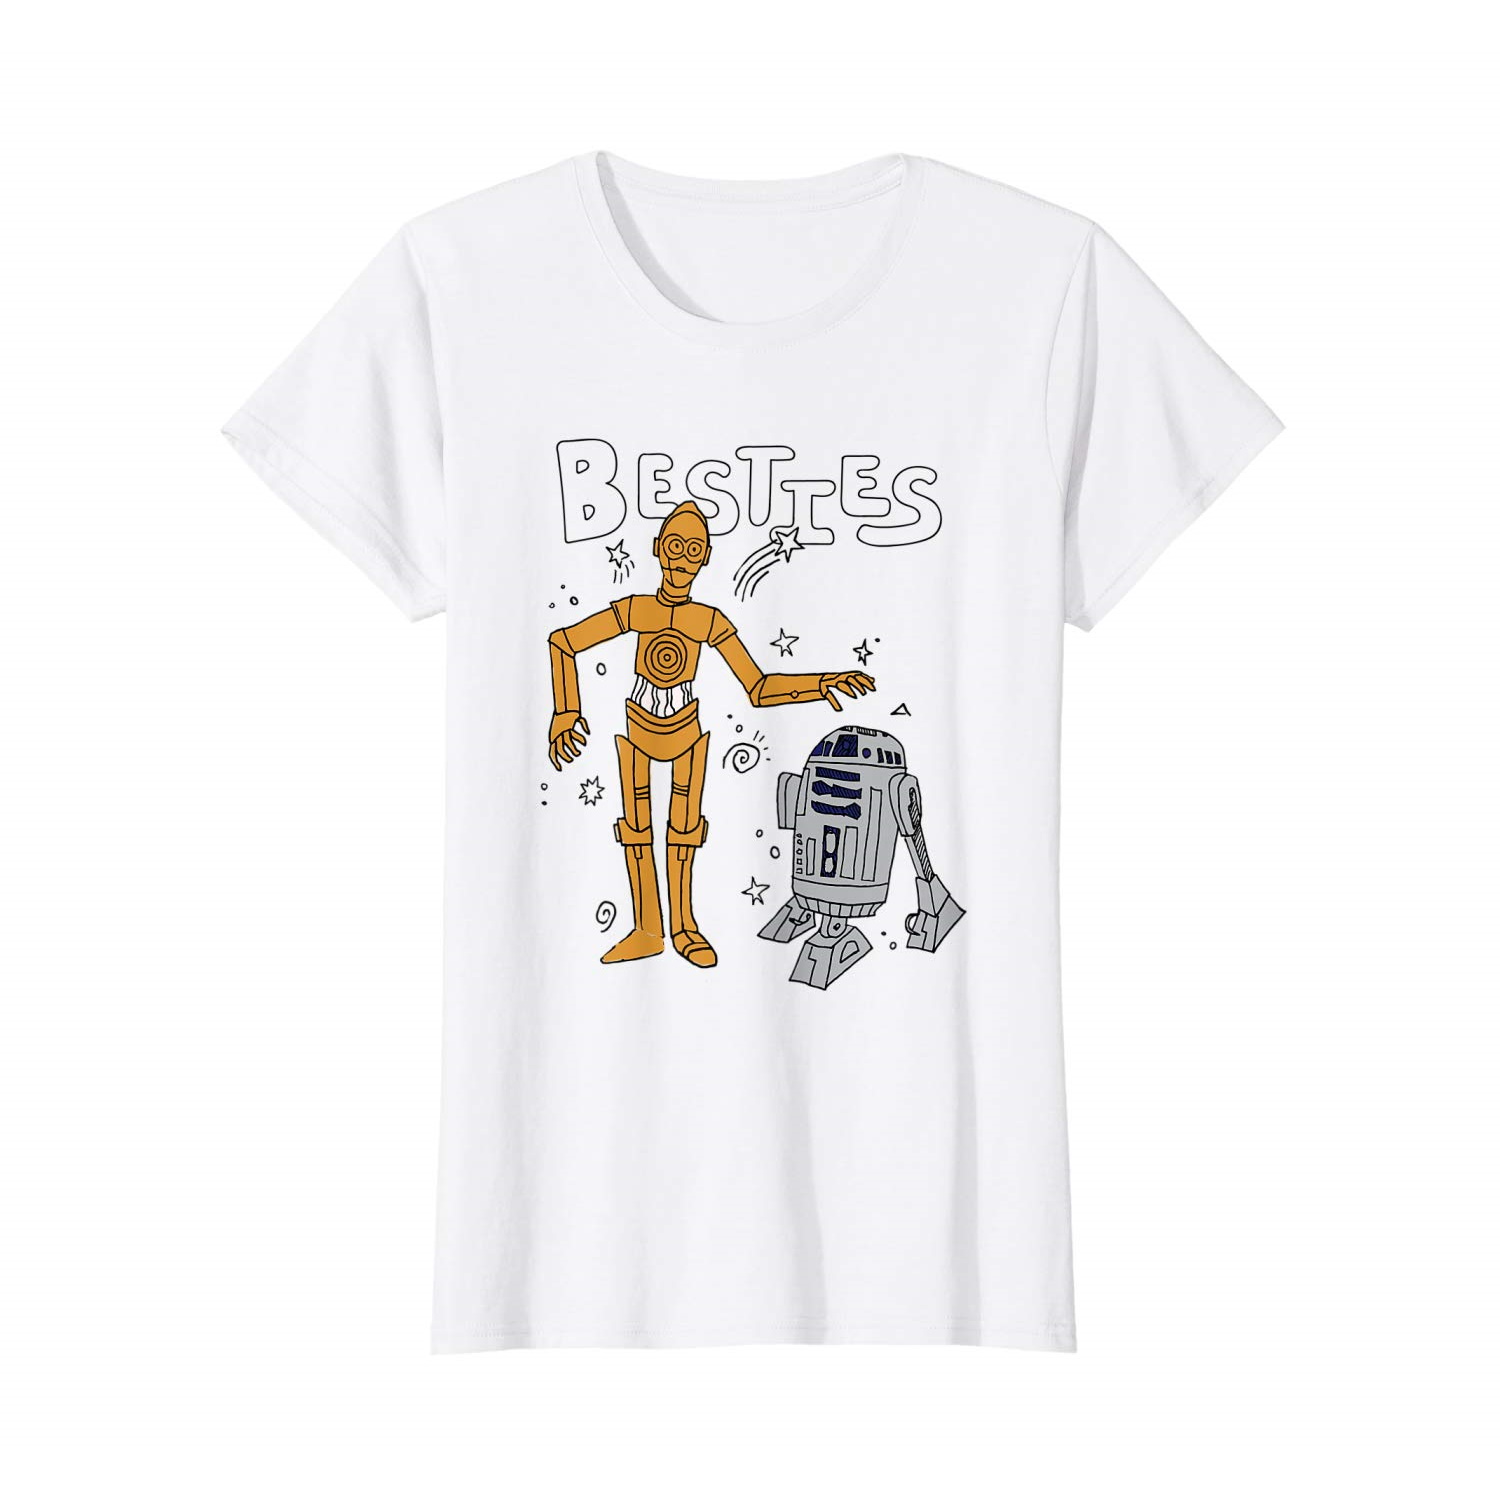 Women's Star Wars C-3PO & R2-D2 T-shirt on Amazon